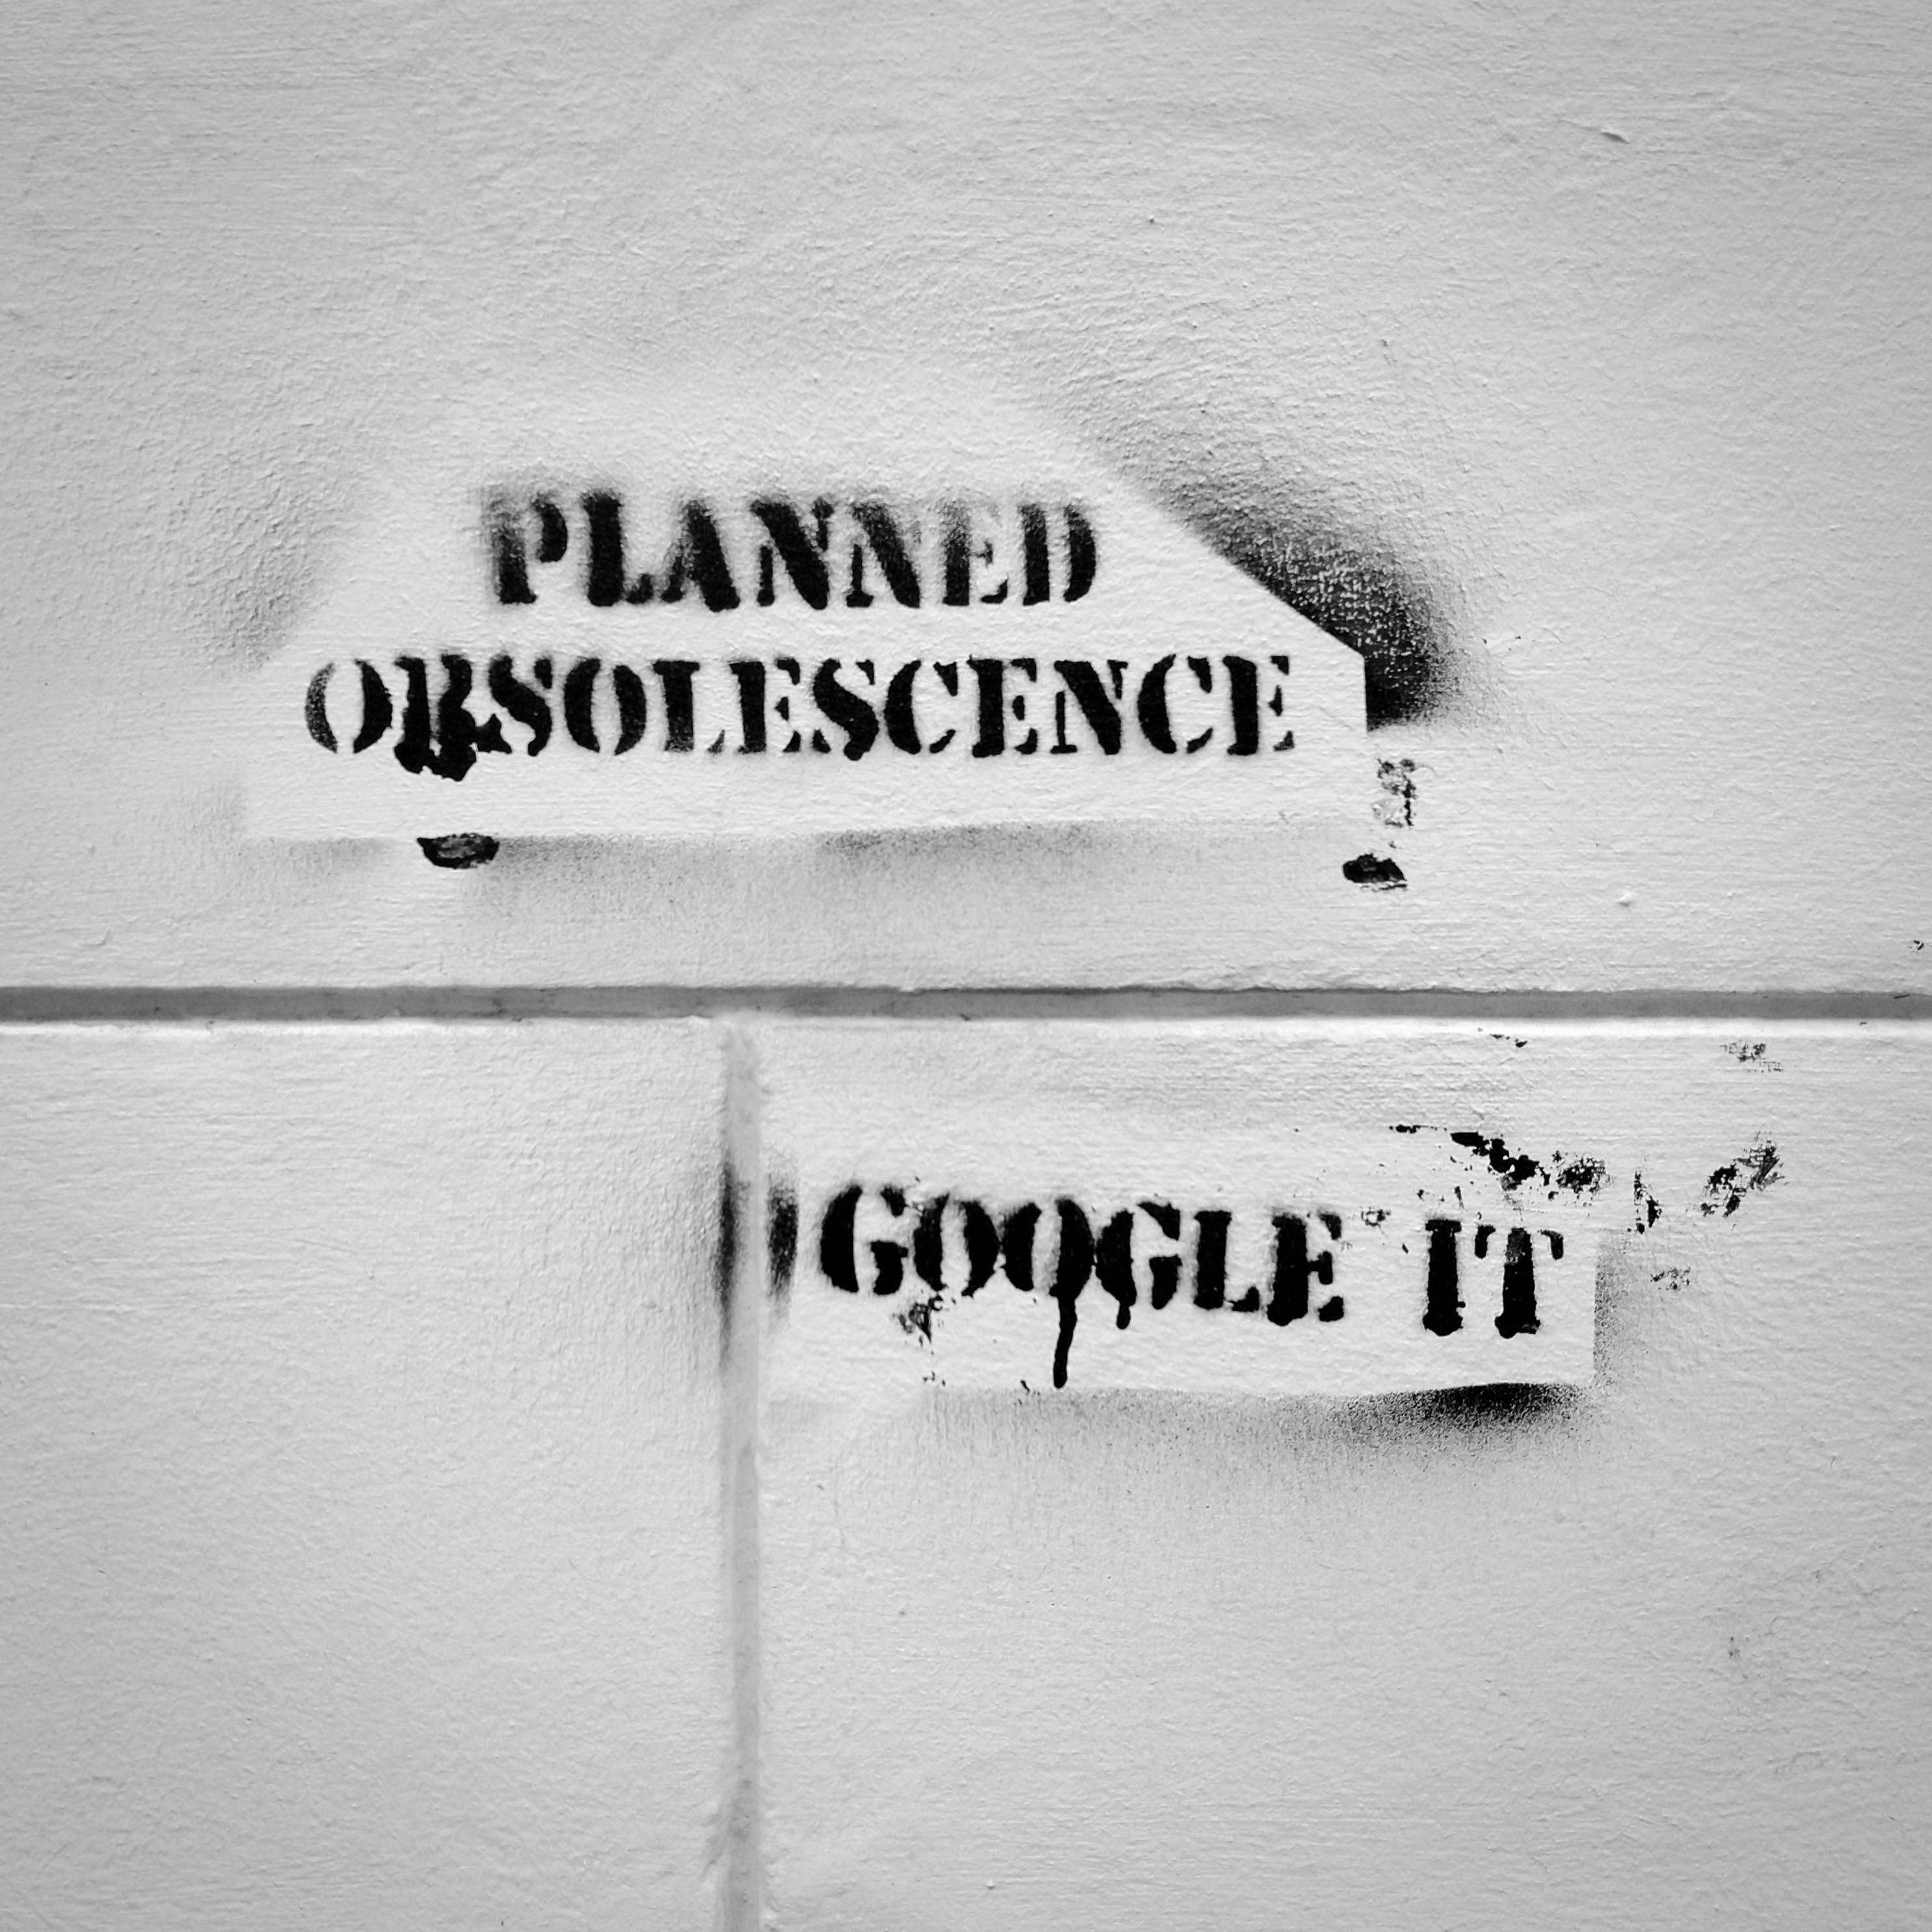 Planned Obsolescence Grafitti in Flensburg!
(true story, btw)